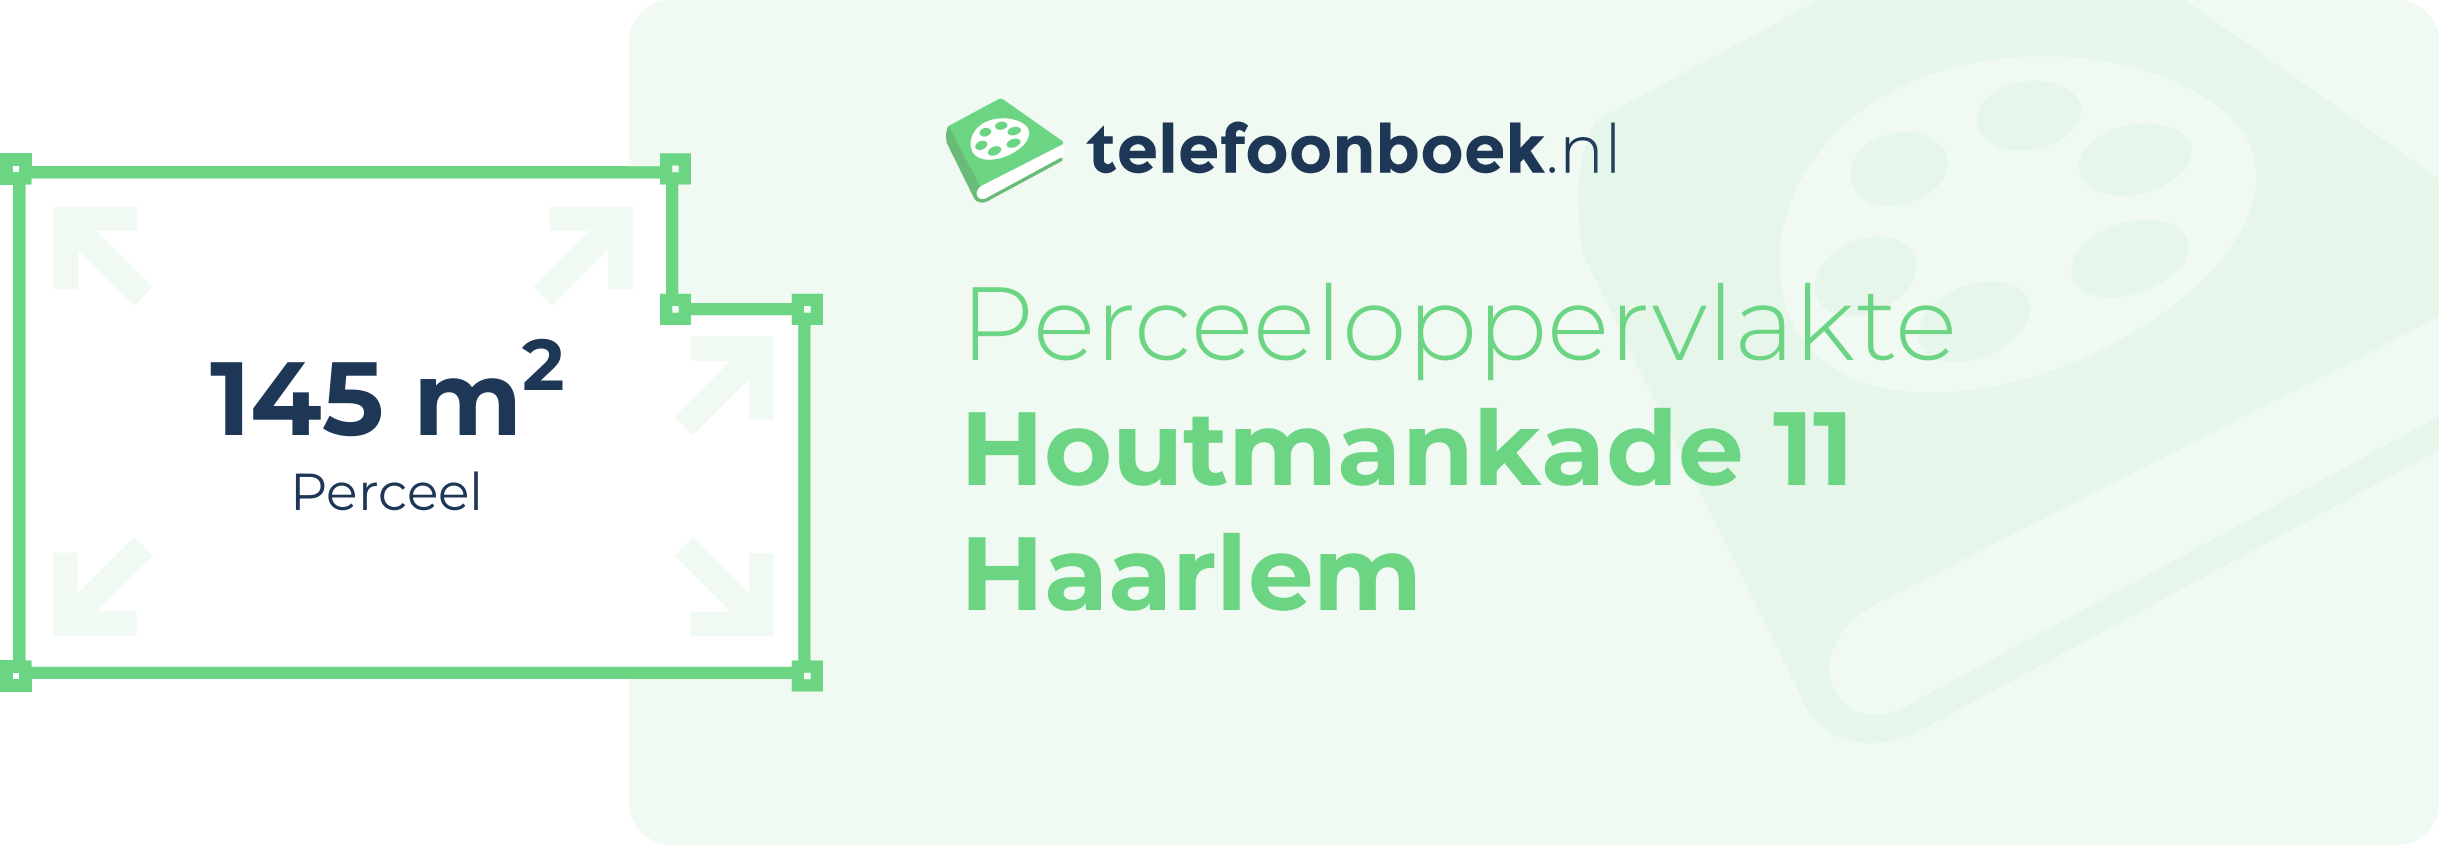 Perceeloppervlakte Houtmankade 11 Haarlem